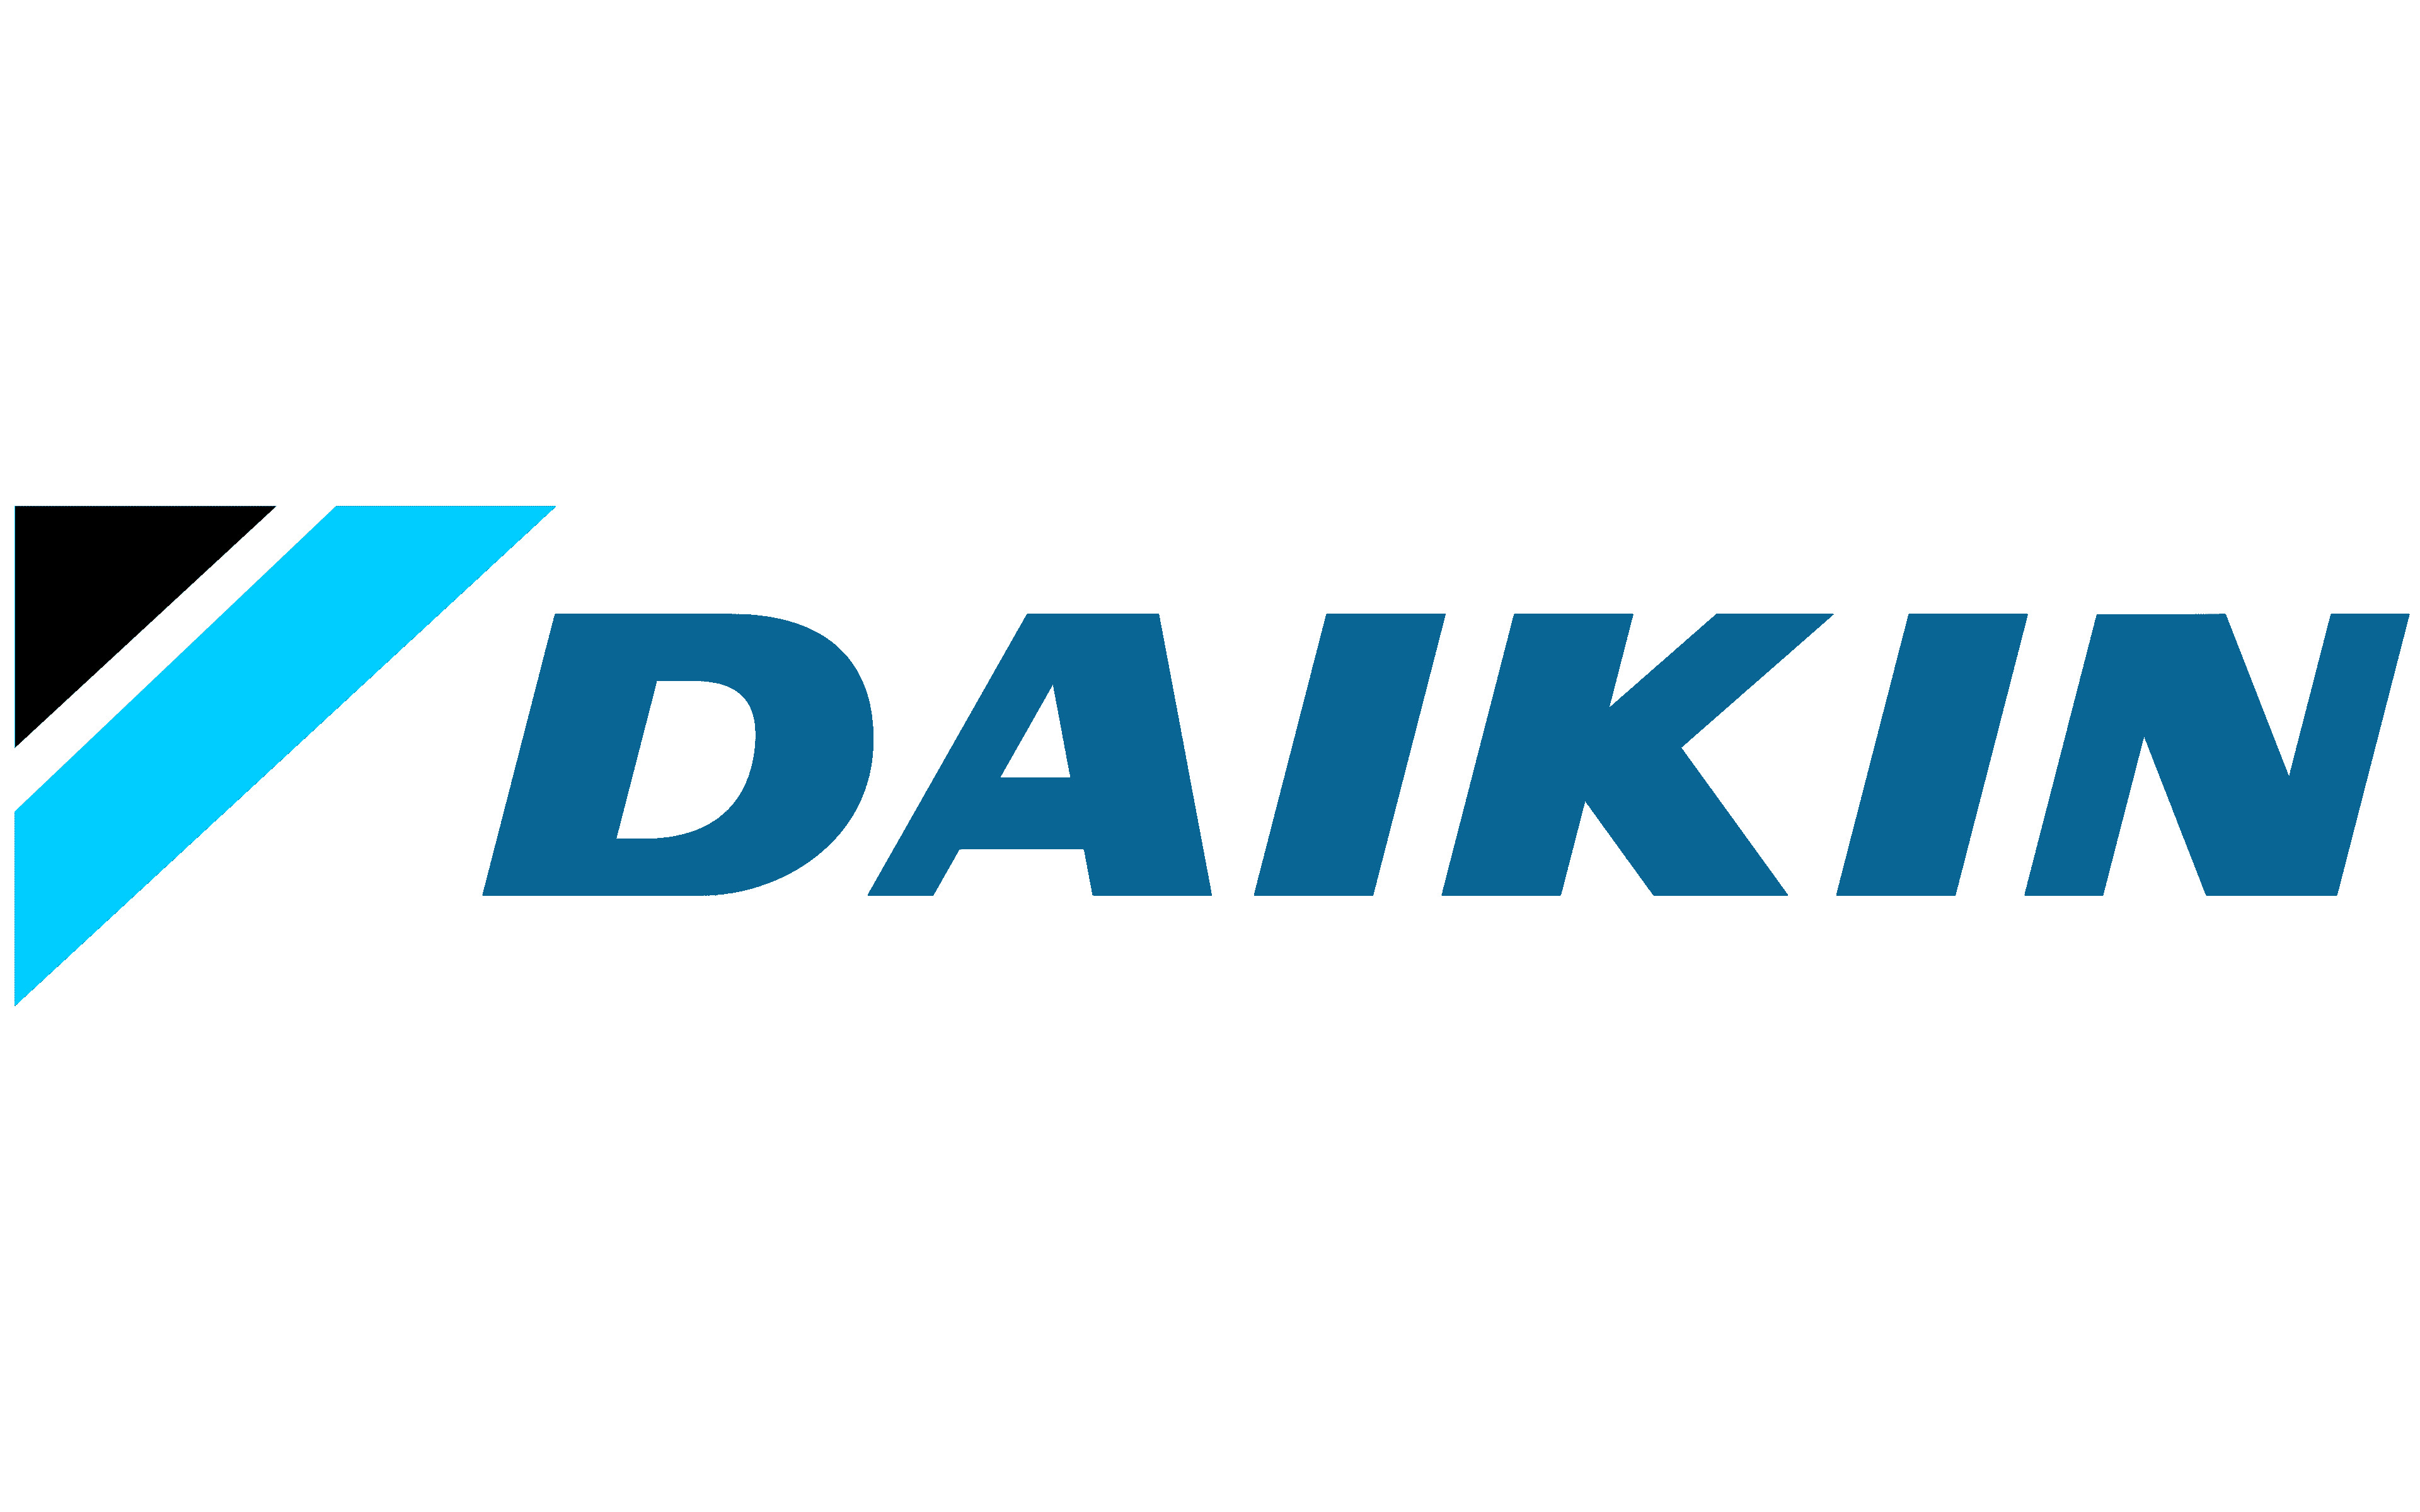 15 Facts About Daikin - Facts.net